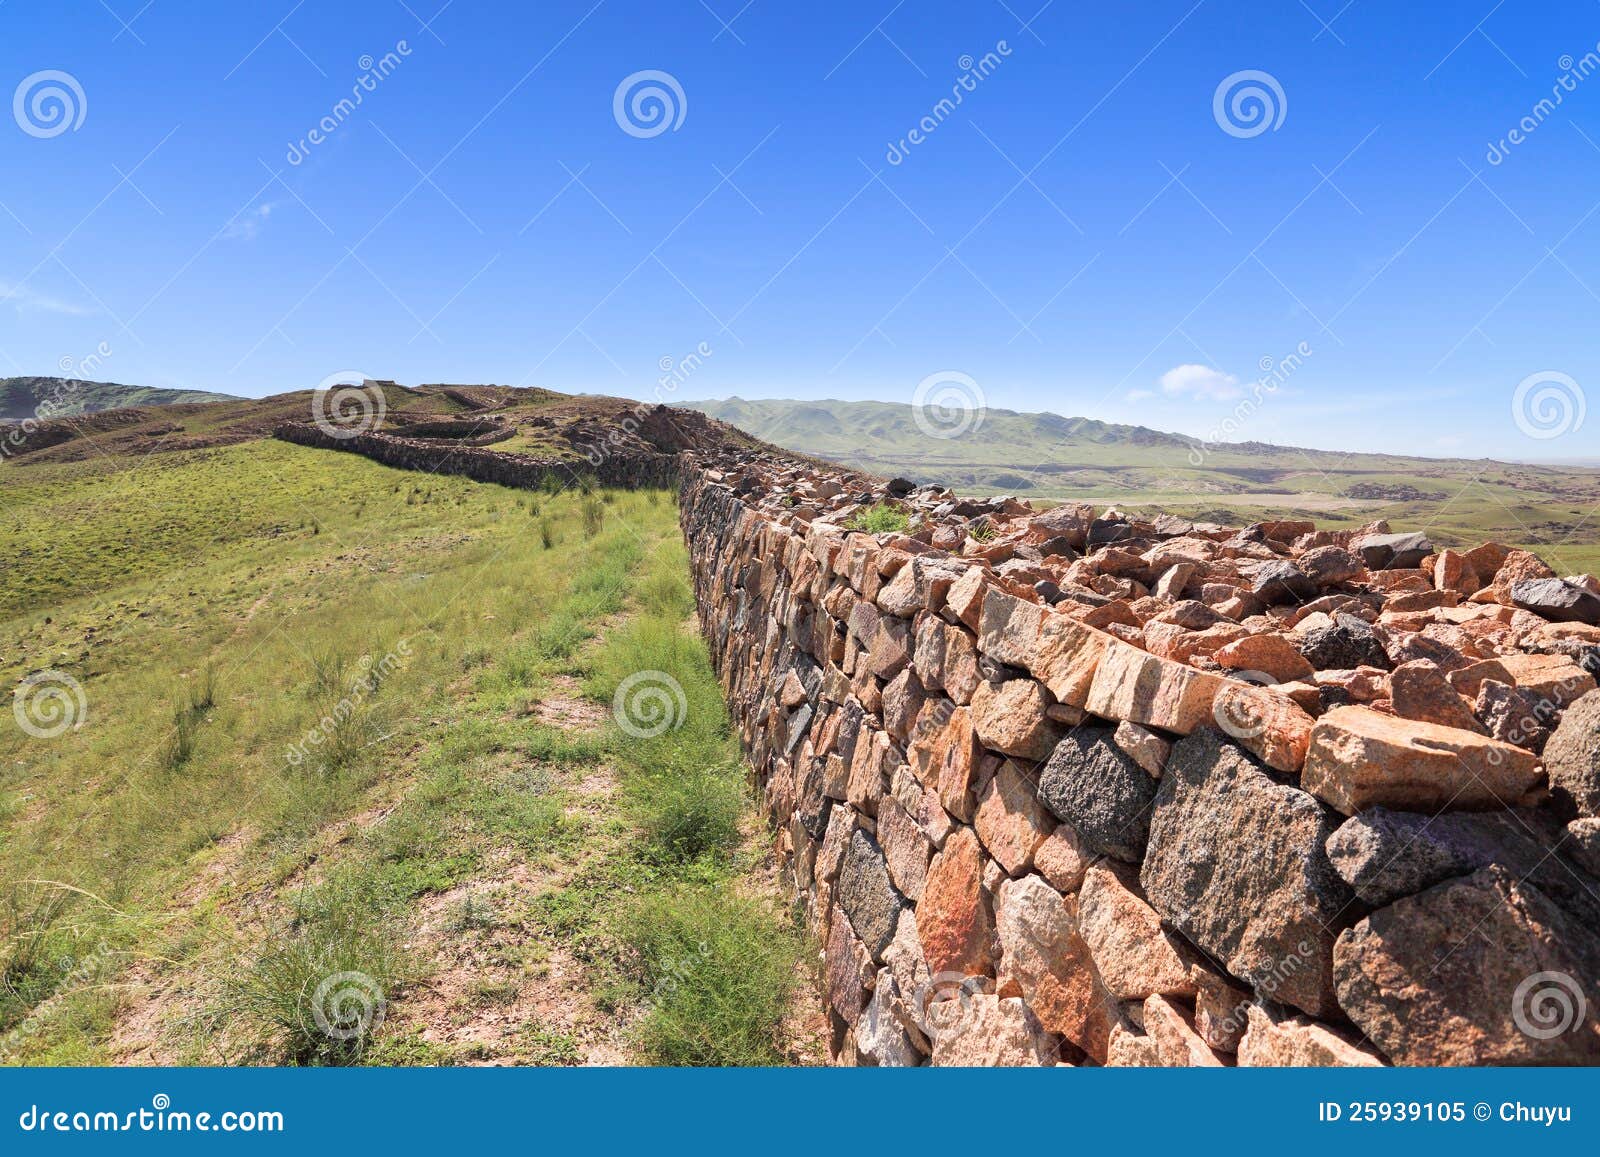 great-wall-ruins-inner-mongolia-25939105